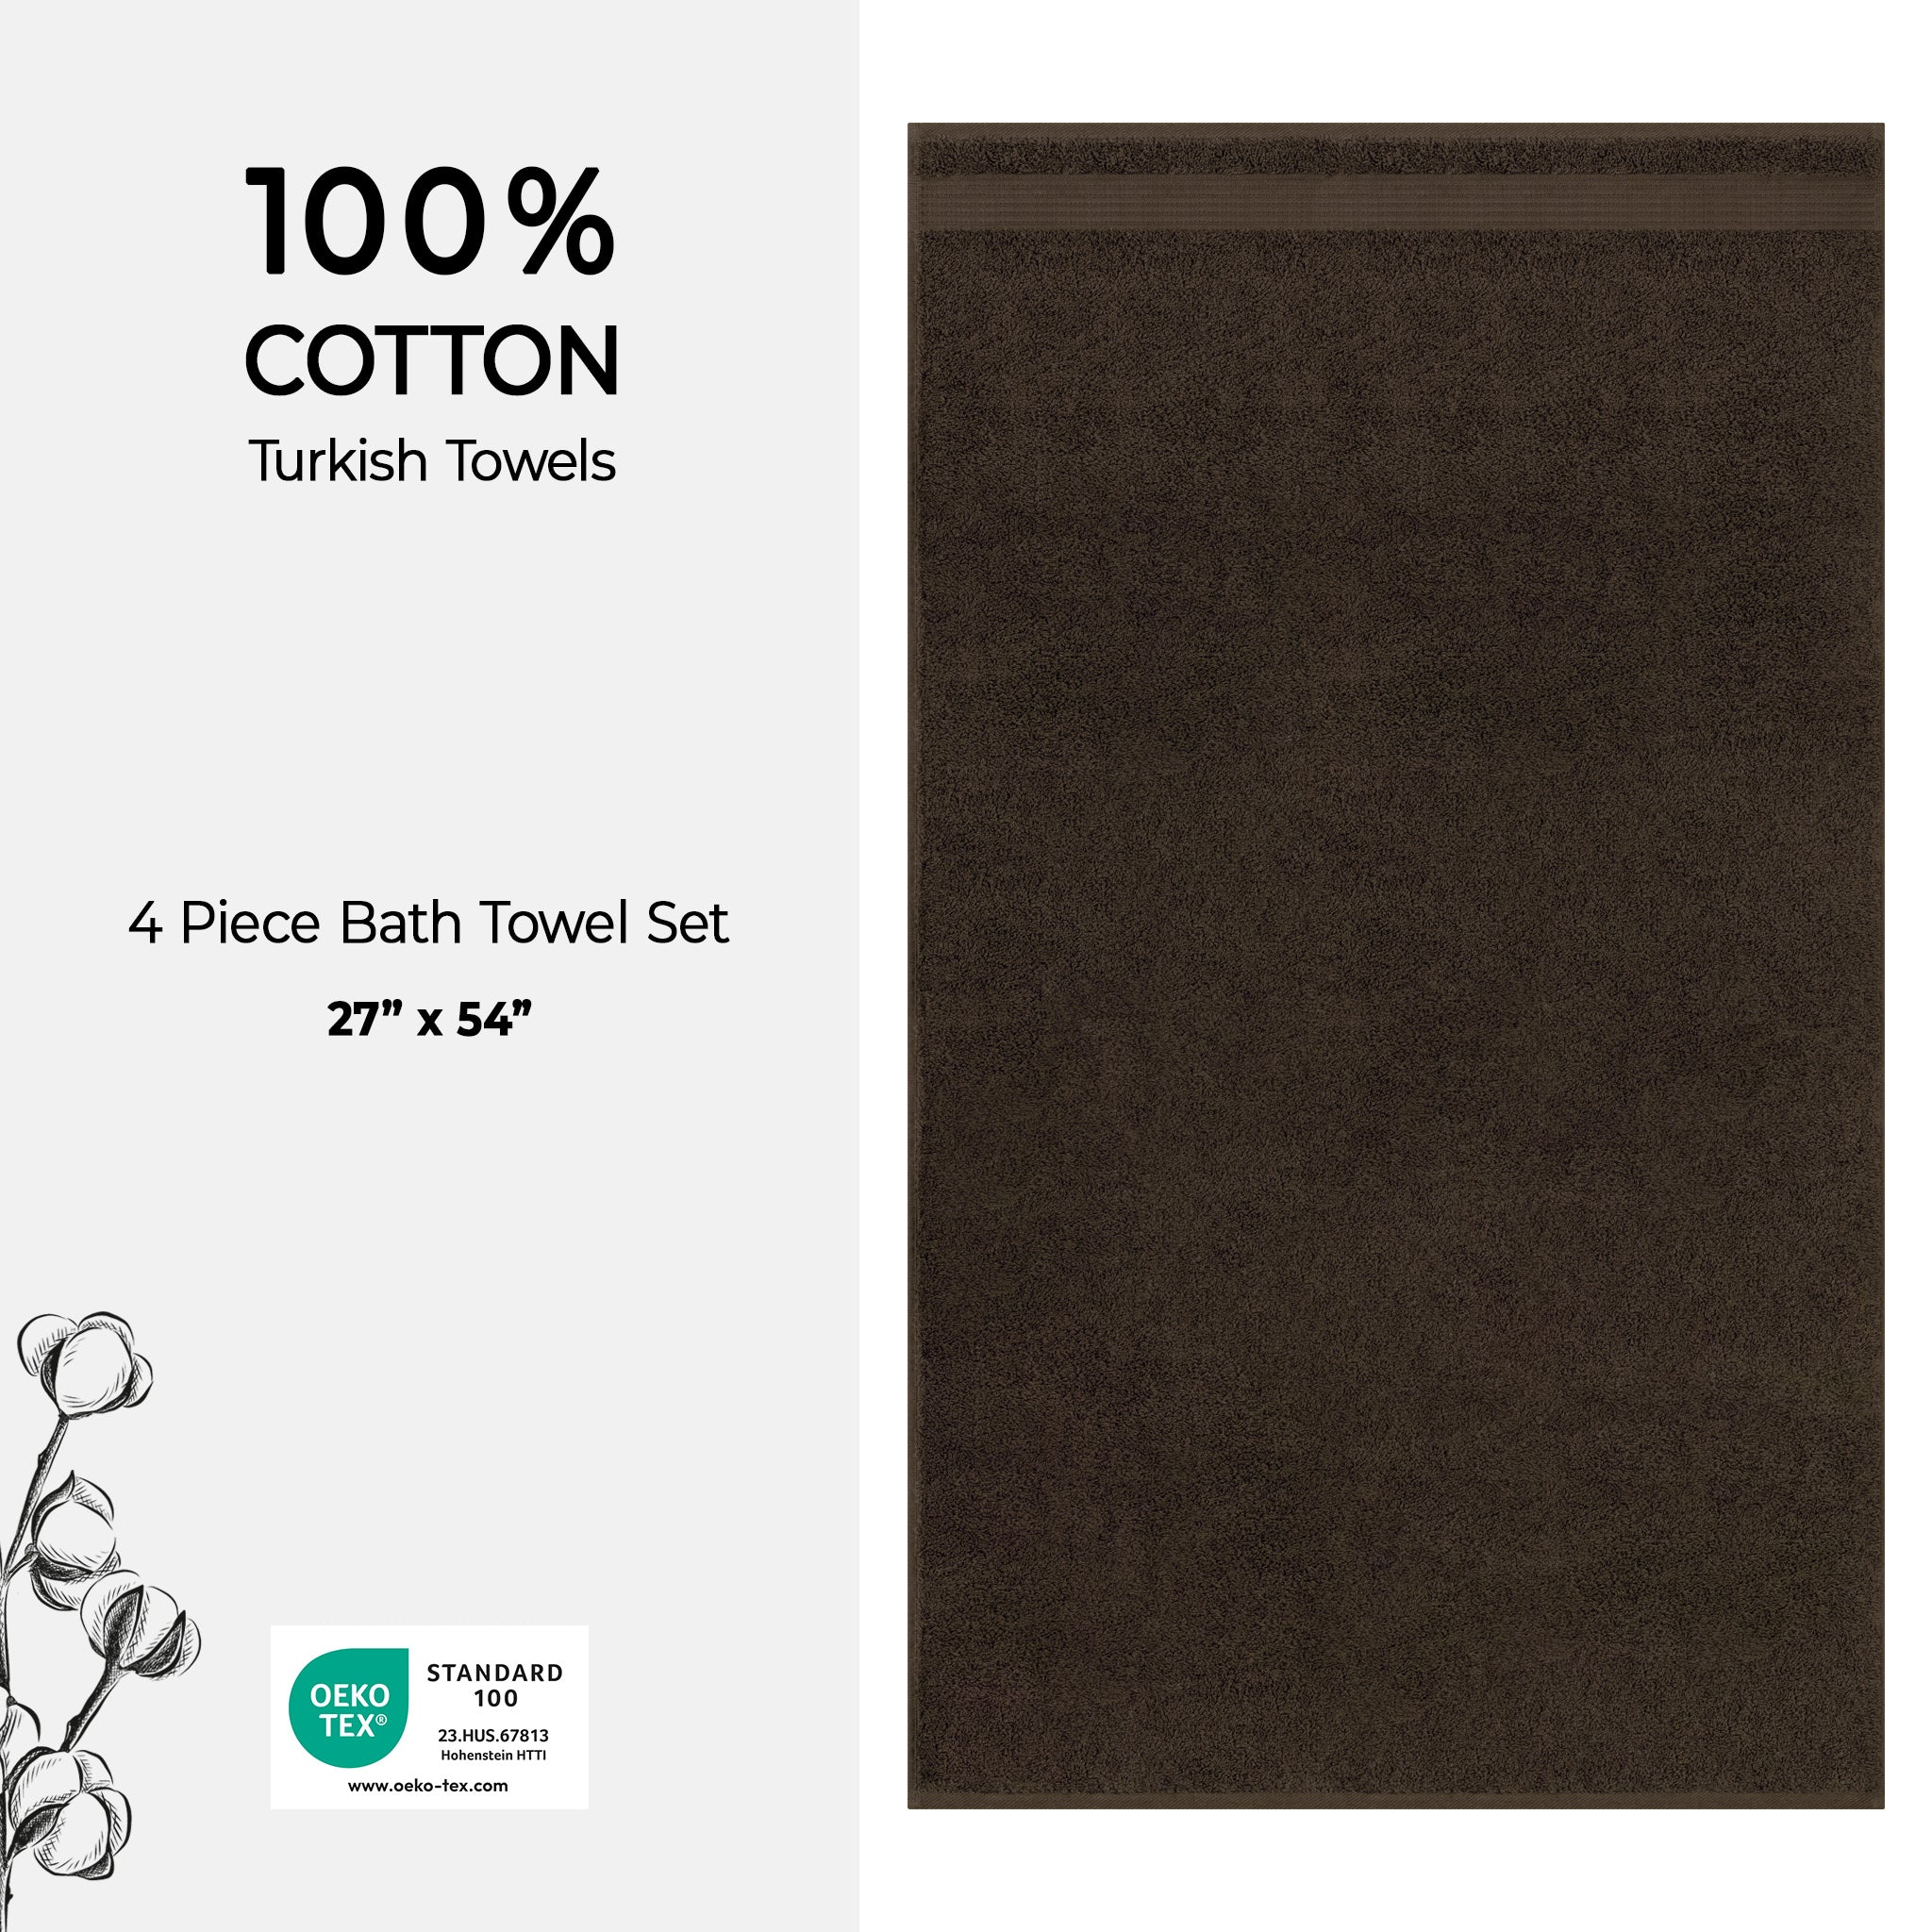 American Soft Linen Bekos 100% Cotton Turkish Towels, 4 Piece Bath Towel Set -chocolate-brown-04